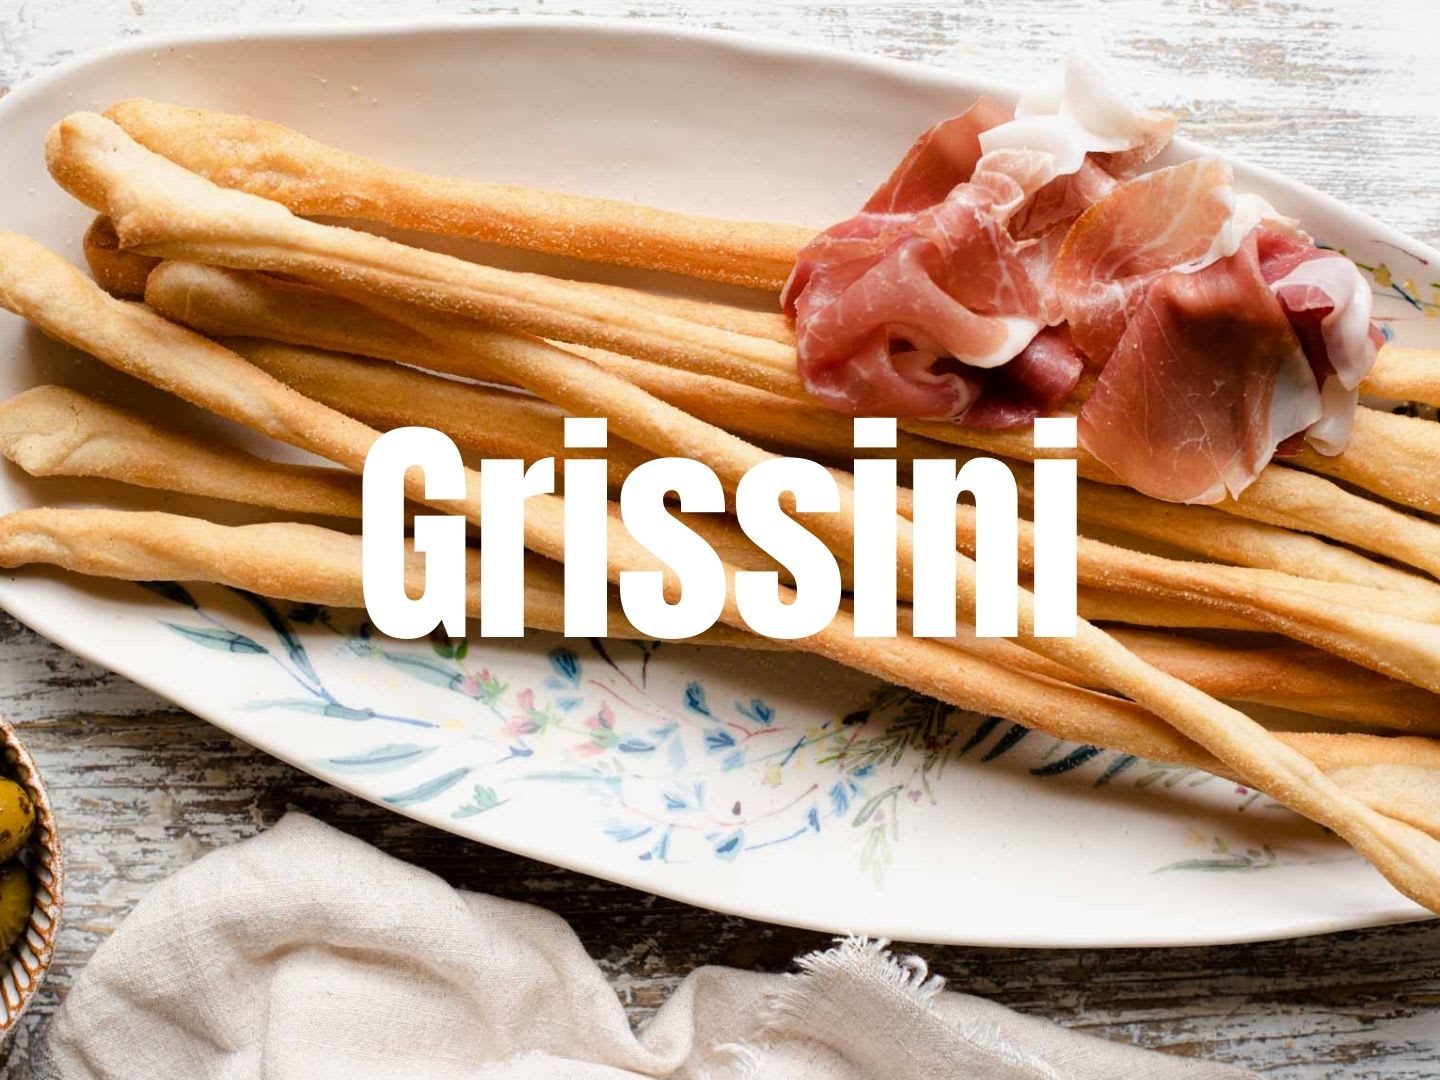 Grissini - Italian Breadsticks - Inside The Rustic Kitchen